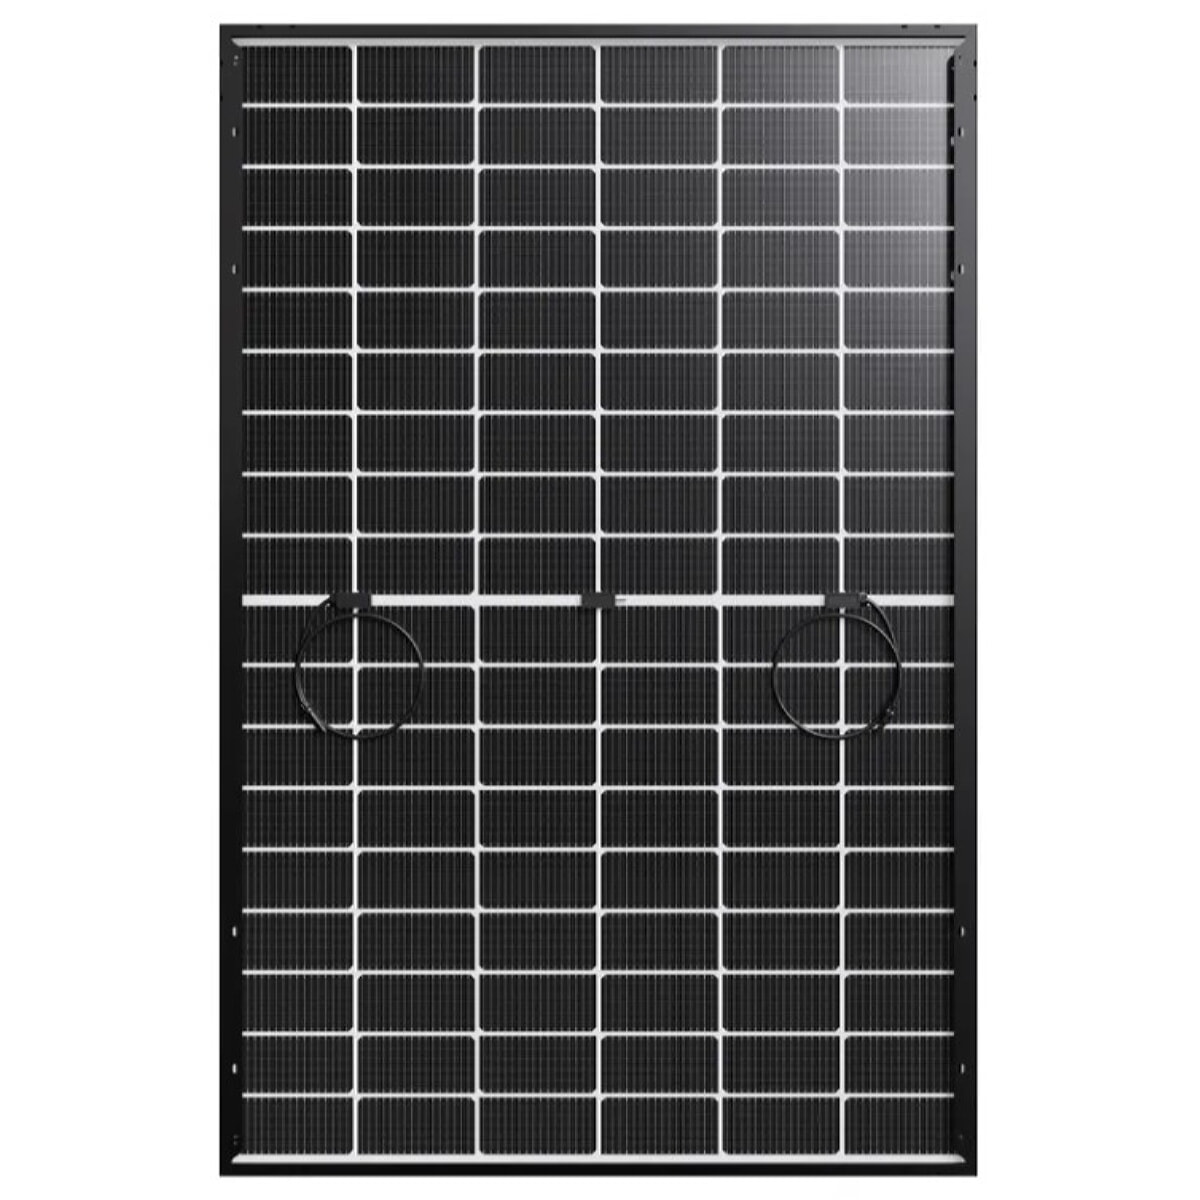 WINAICO solar module WST-430NGX-D3 glass-glass bifacial black frame